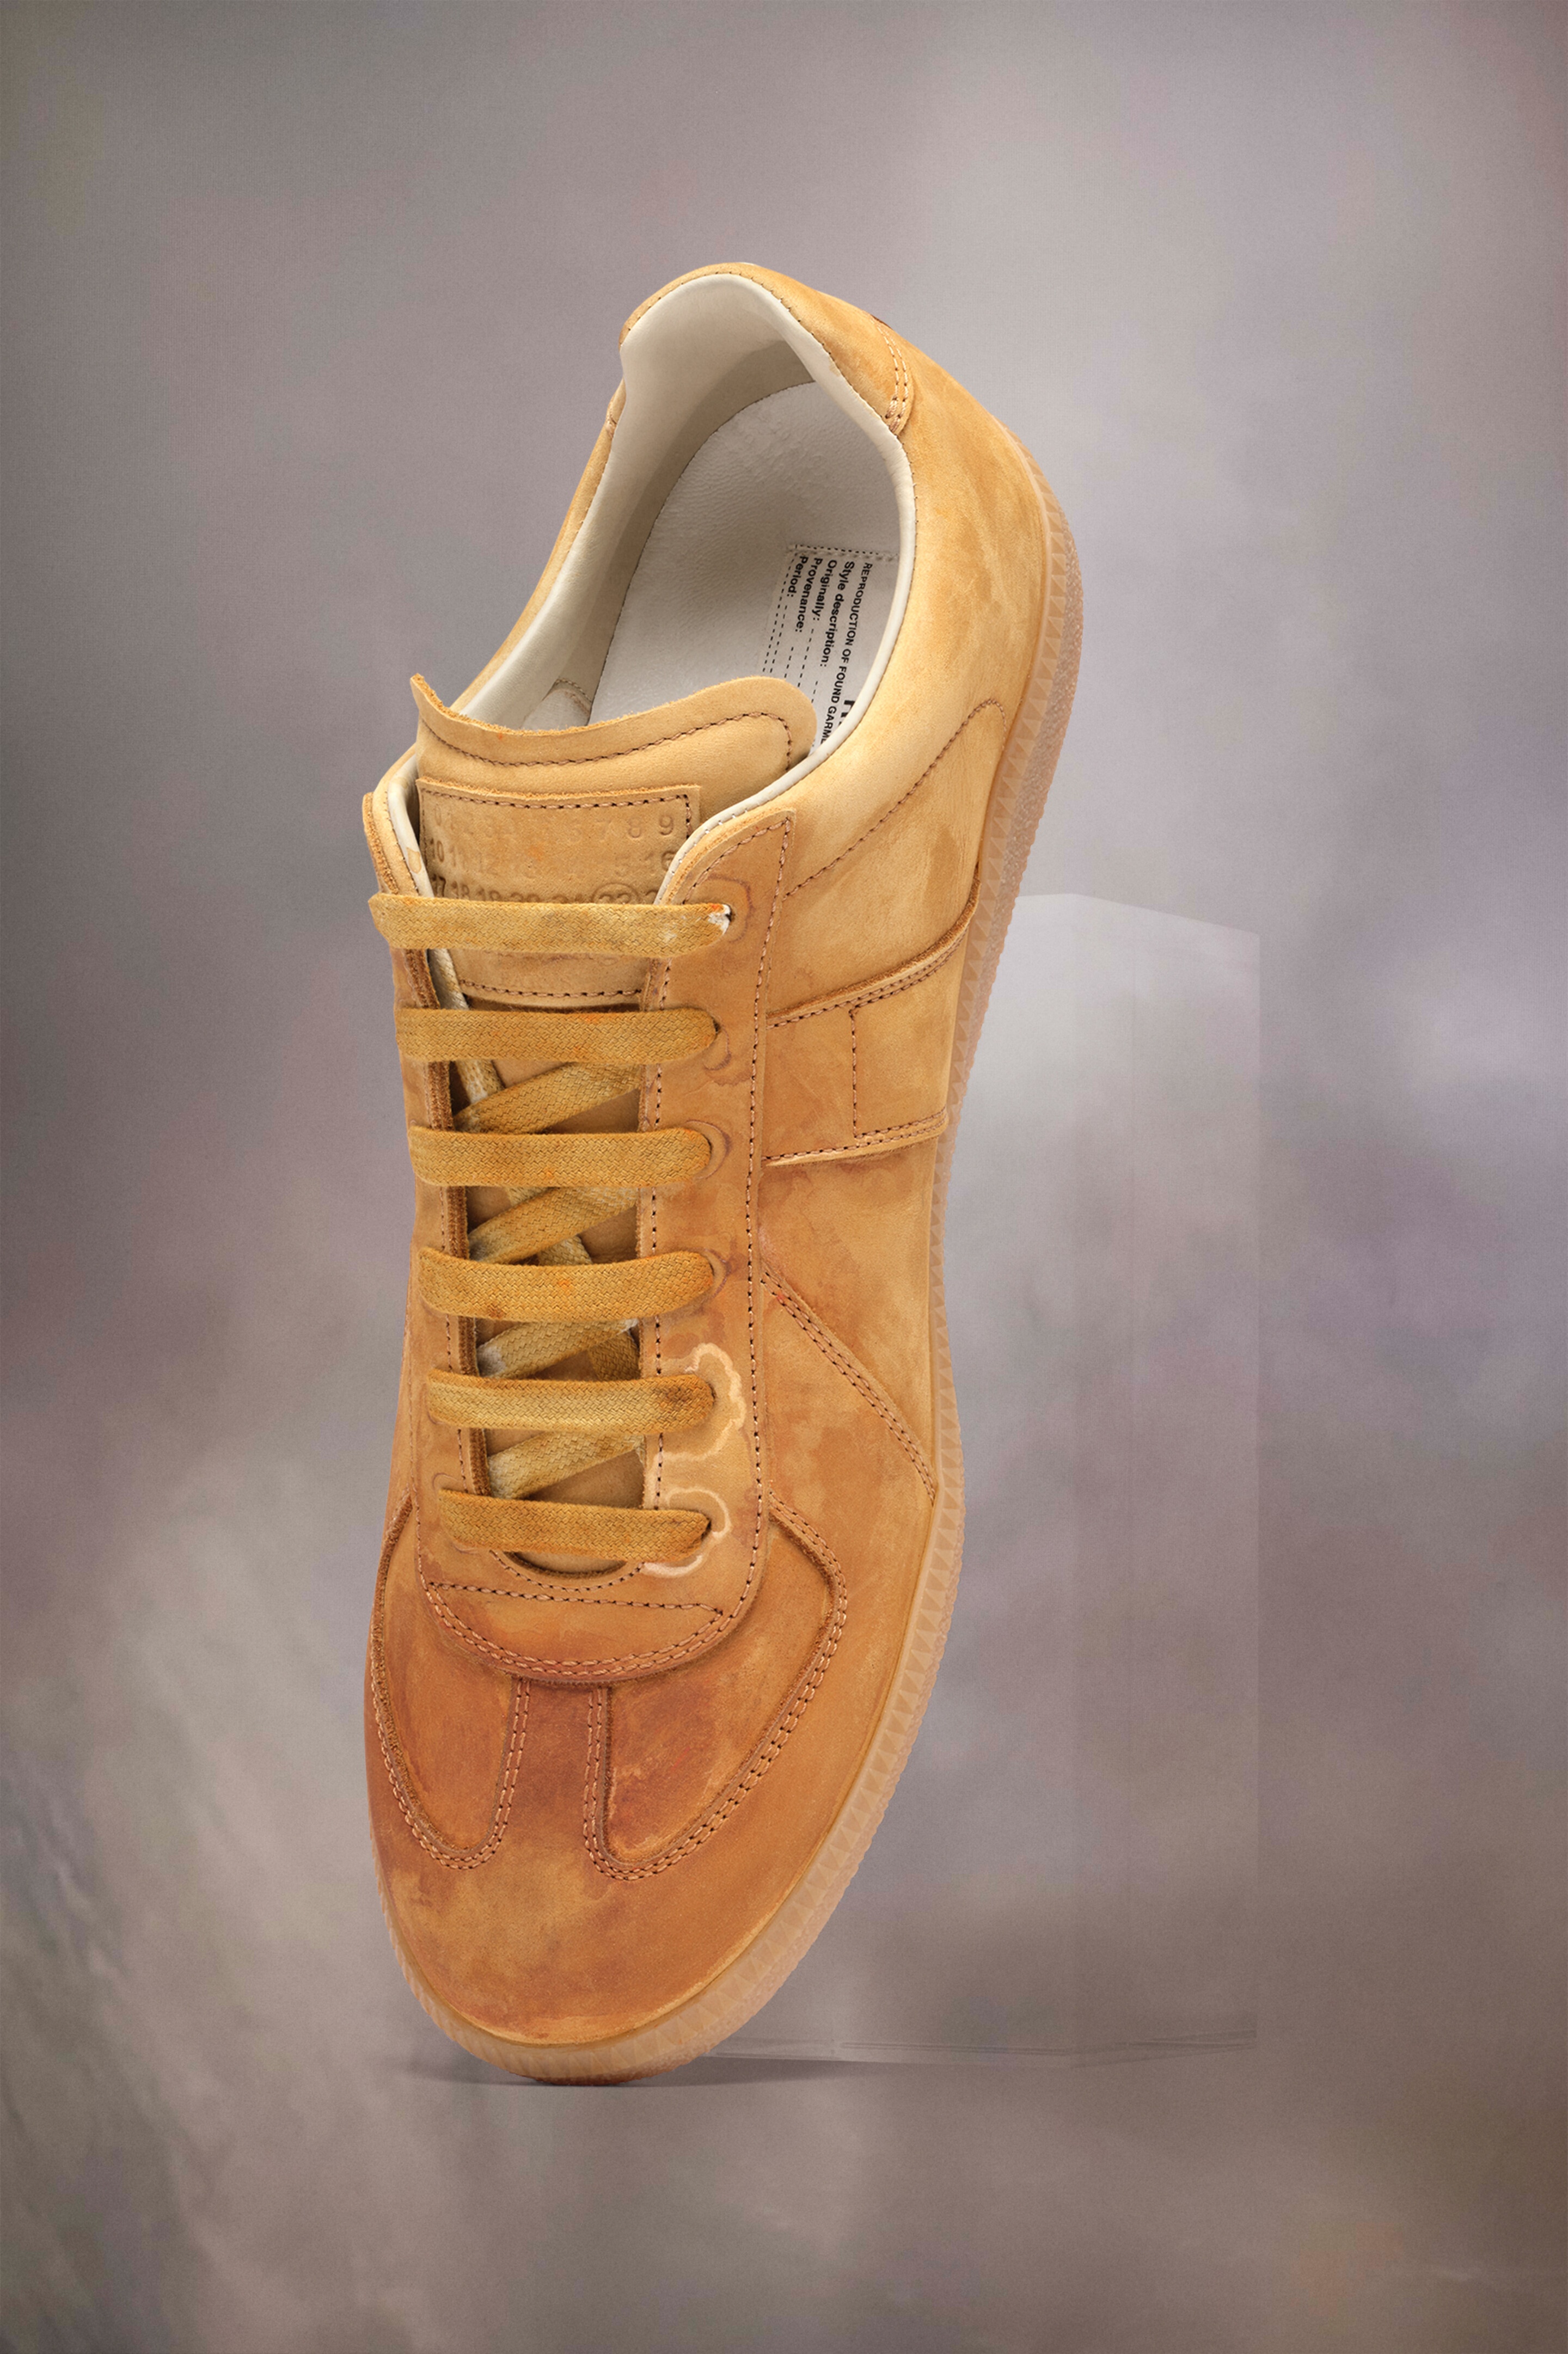 Artist Recicla Replica sneakers - 1